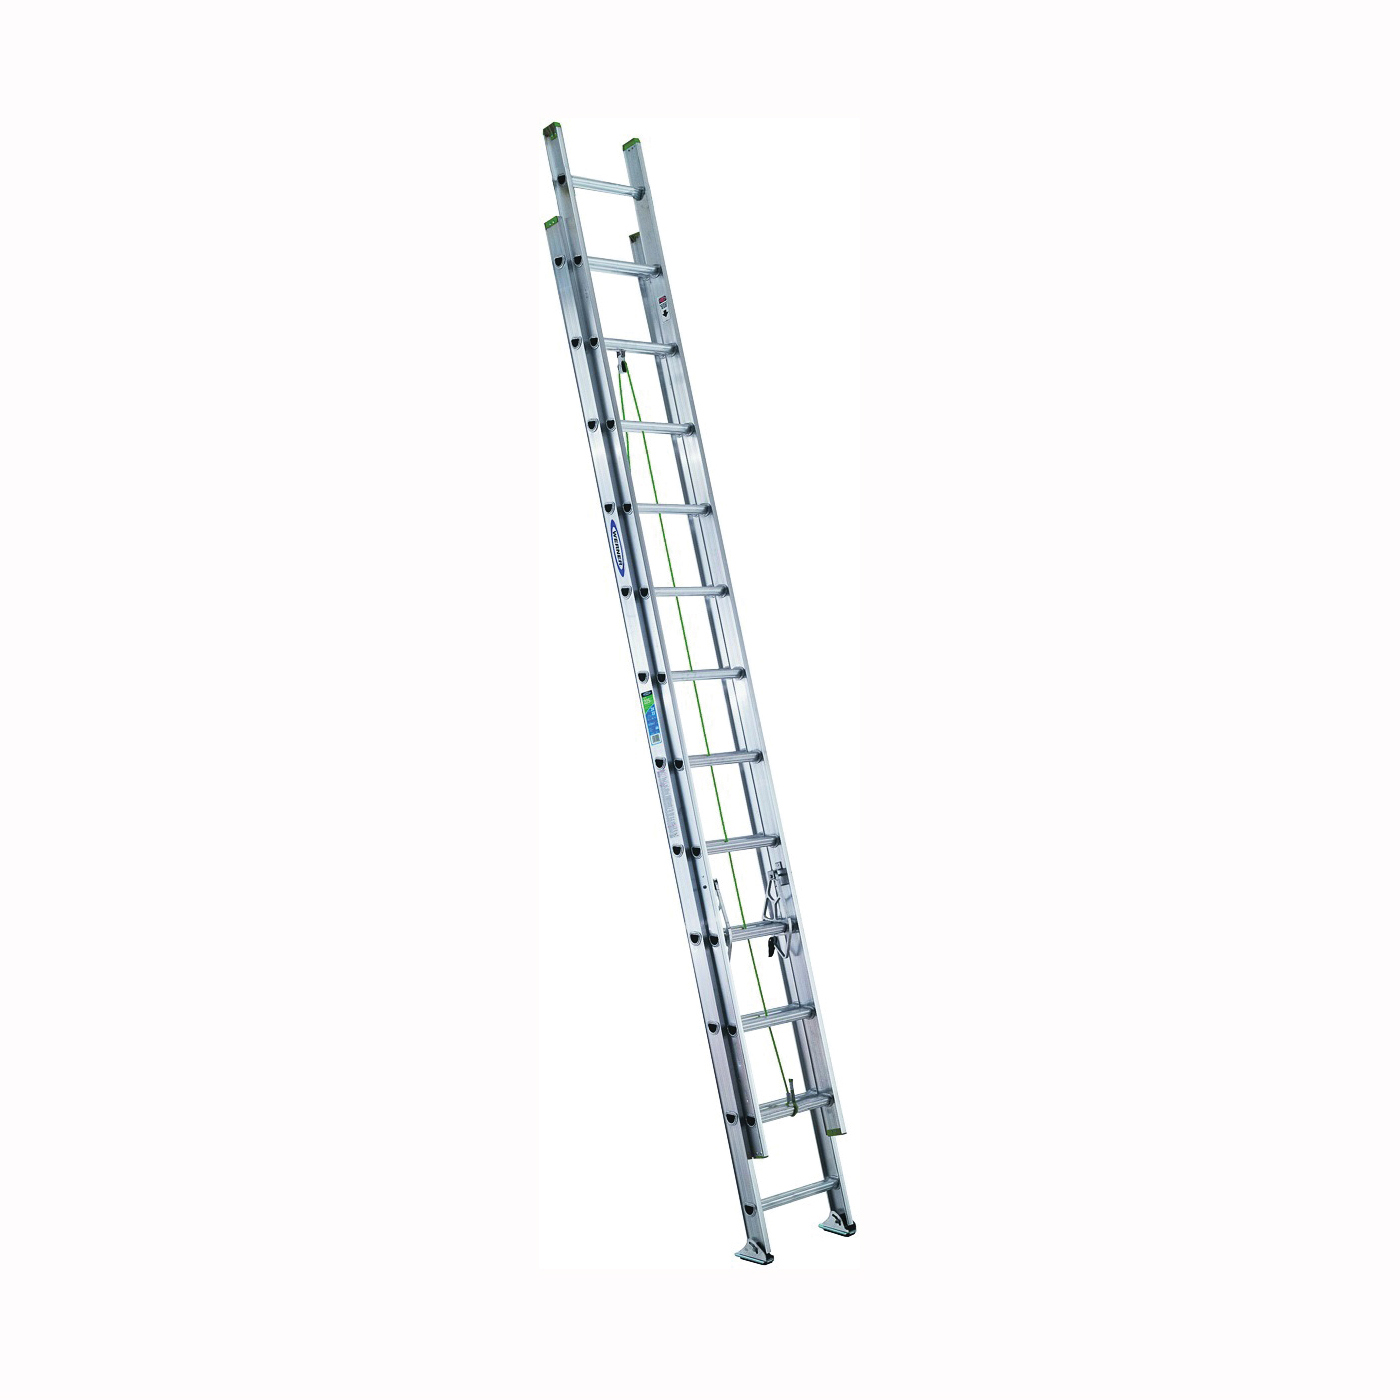 WERNER D1240-2  40 ft. Extension Ladder, 37 ft. Reach, 225 lb, Aluminum